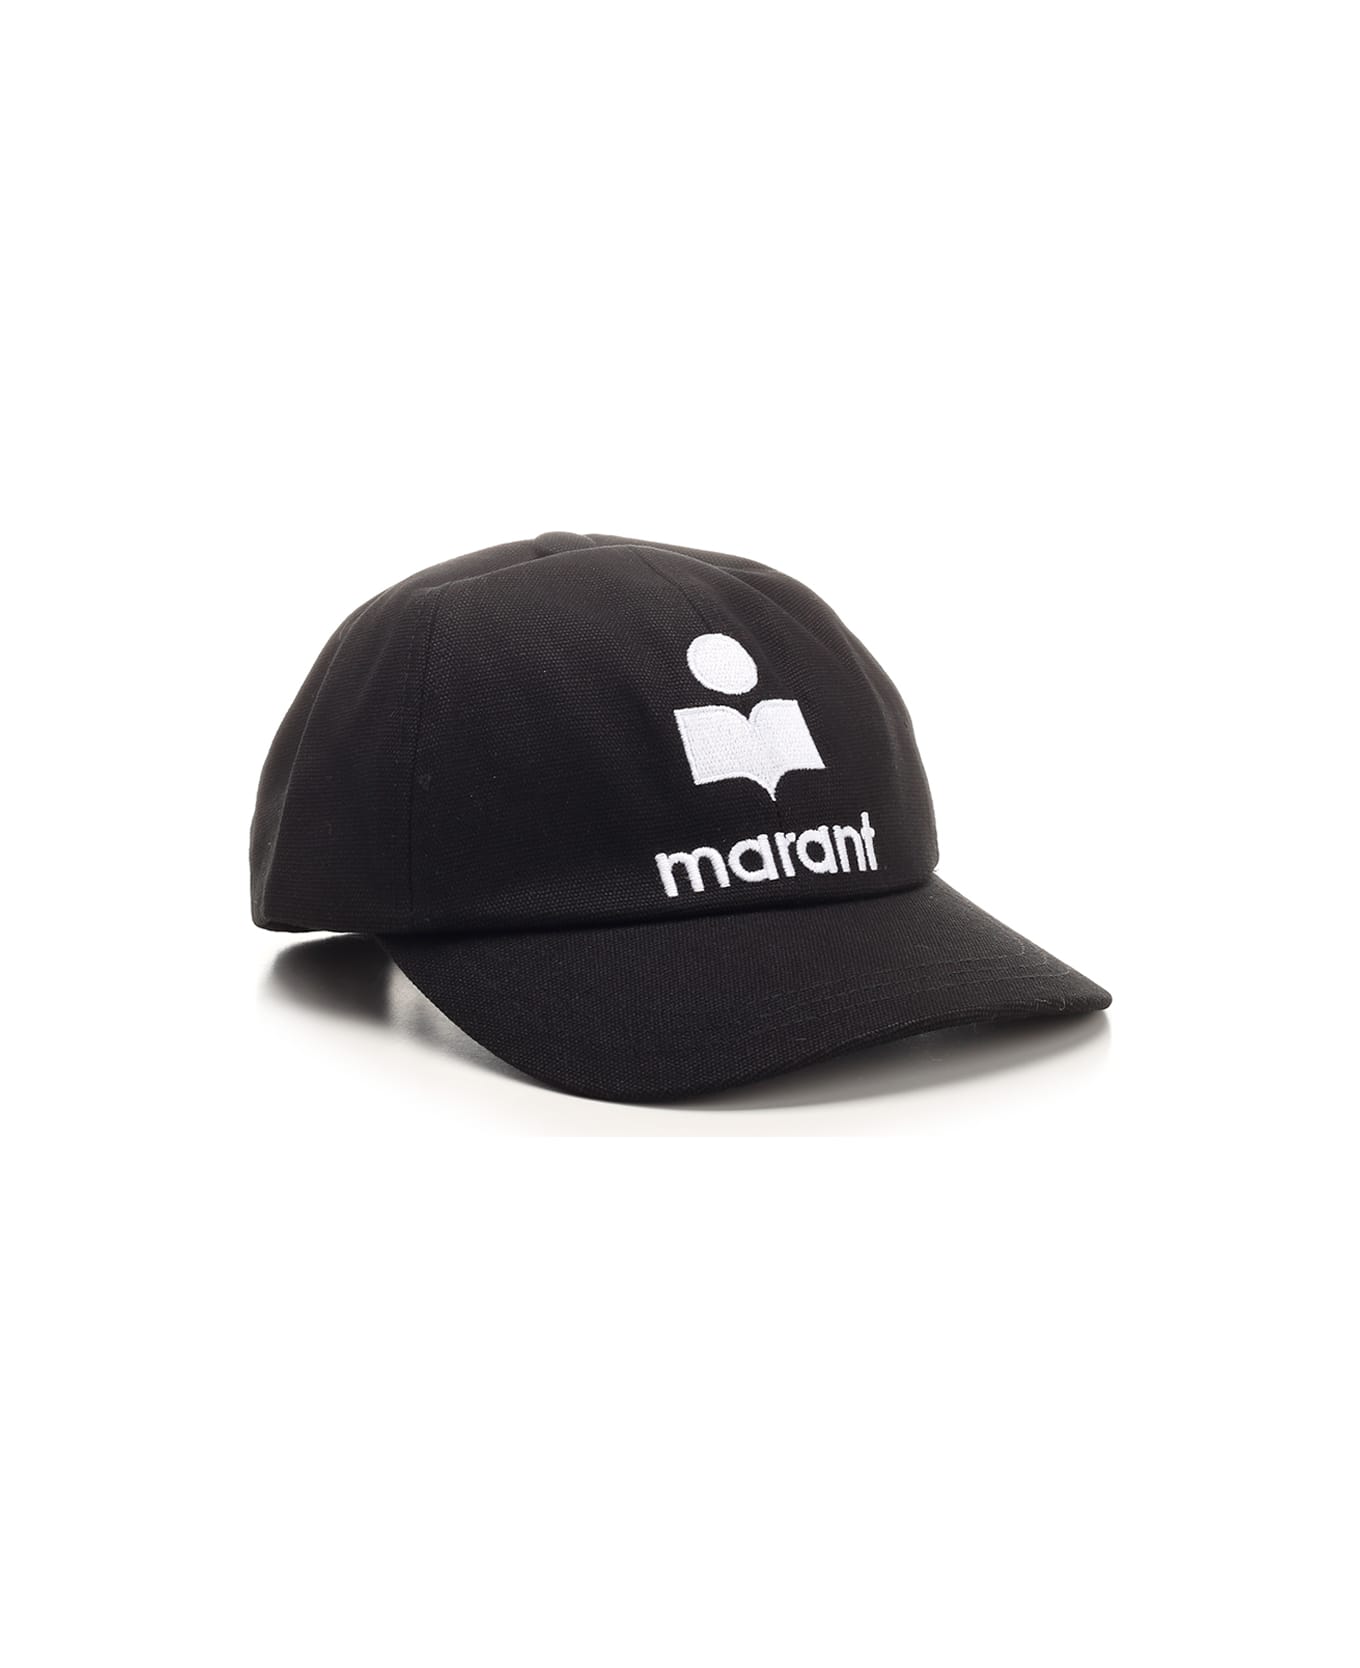 Isabel Marant Black 'tyron' Baseball Hat - Black